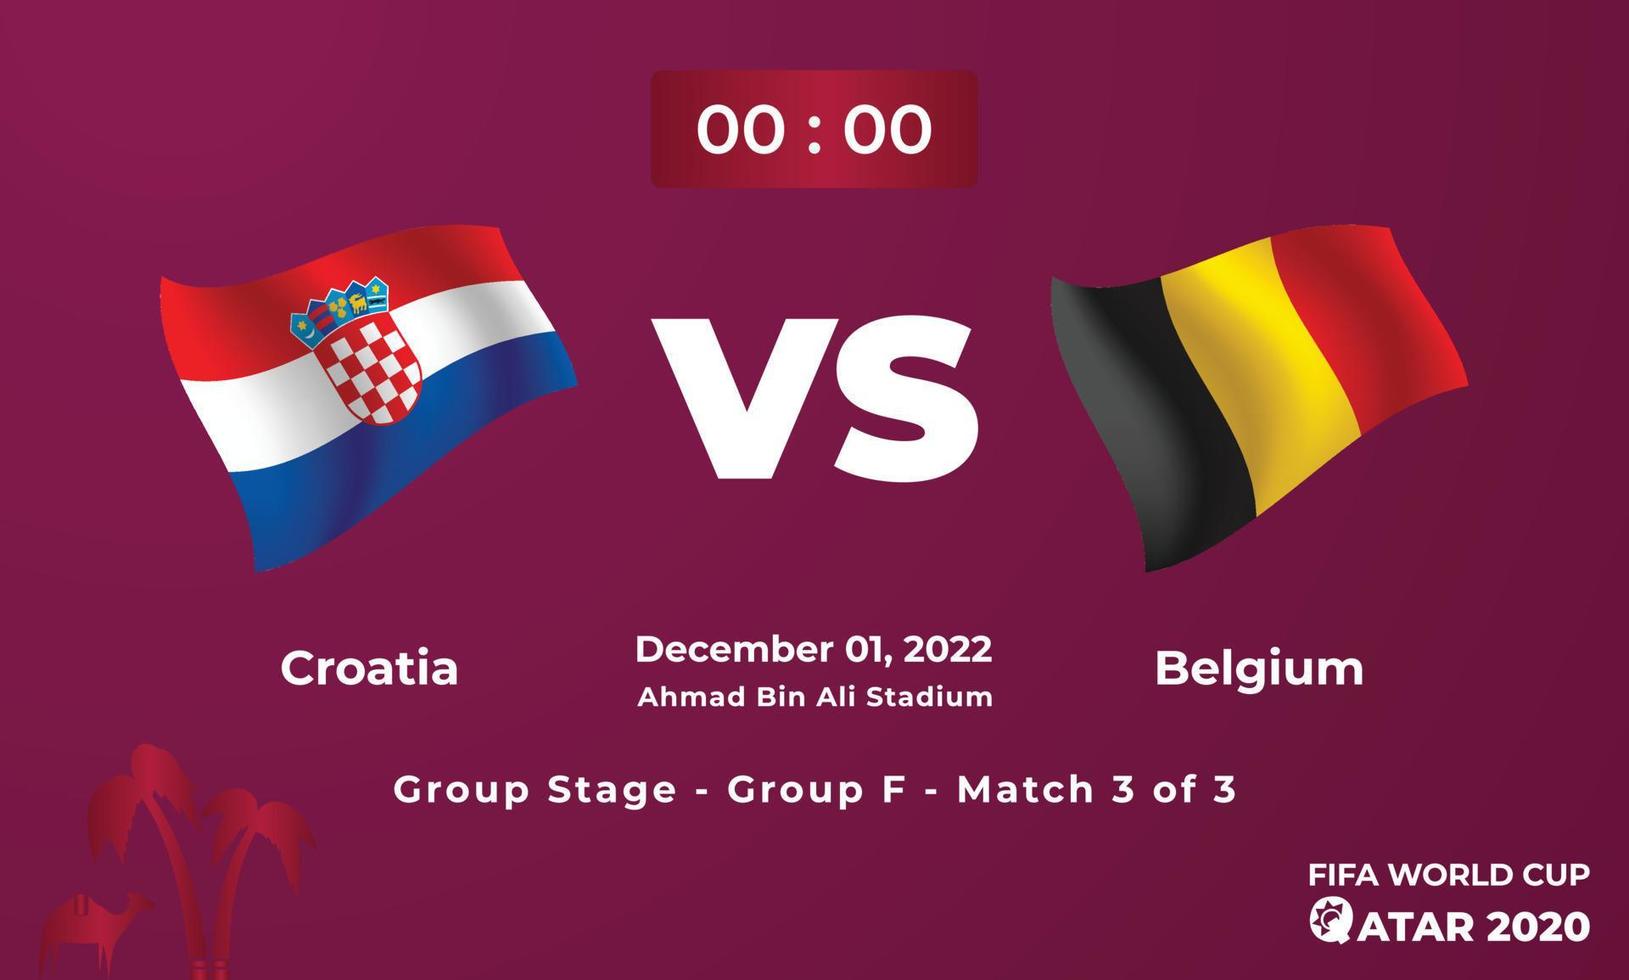 Croatia VS Belgium Football MatchTemplate, FIFA World Cup in Qatar 2022 vector